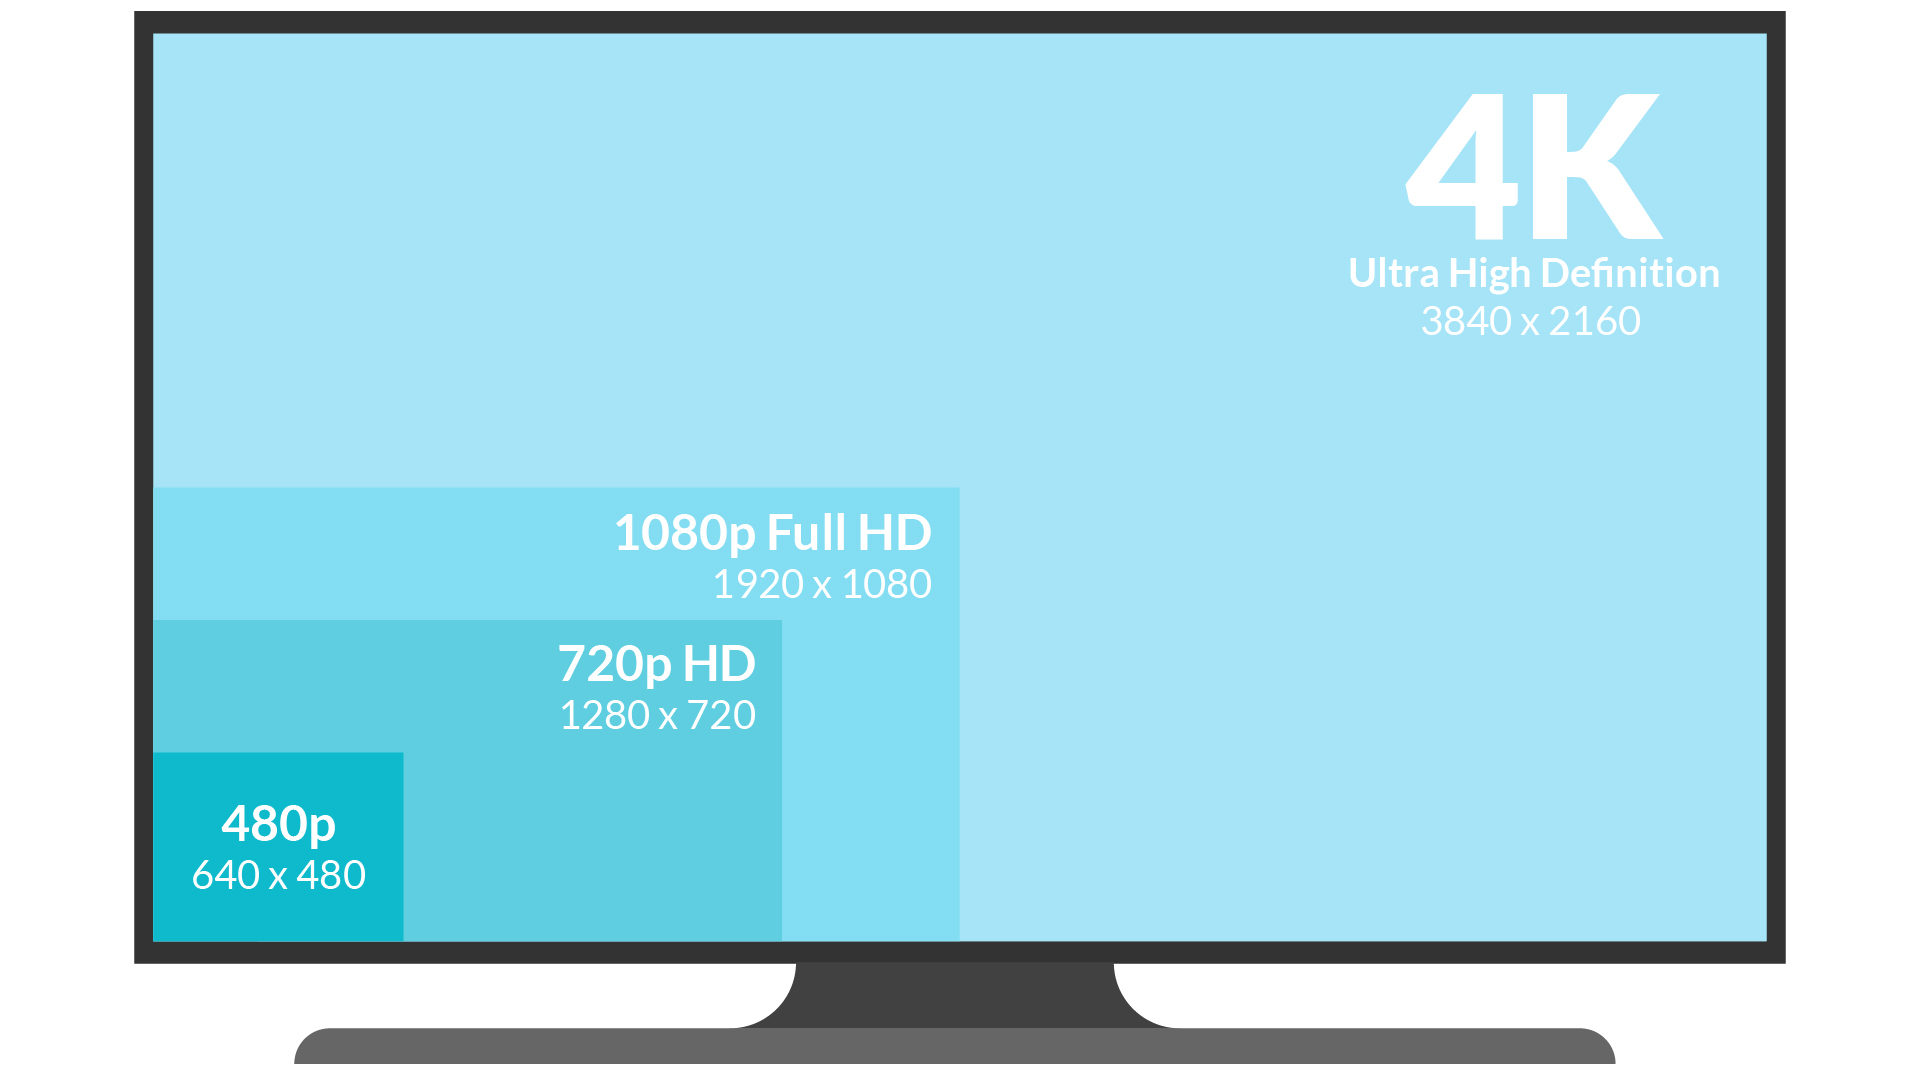 4K vs 1080p vs 720p vs 480p resolution scaling comparison